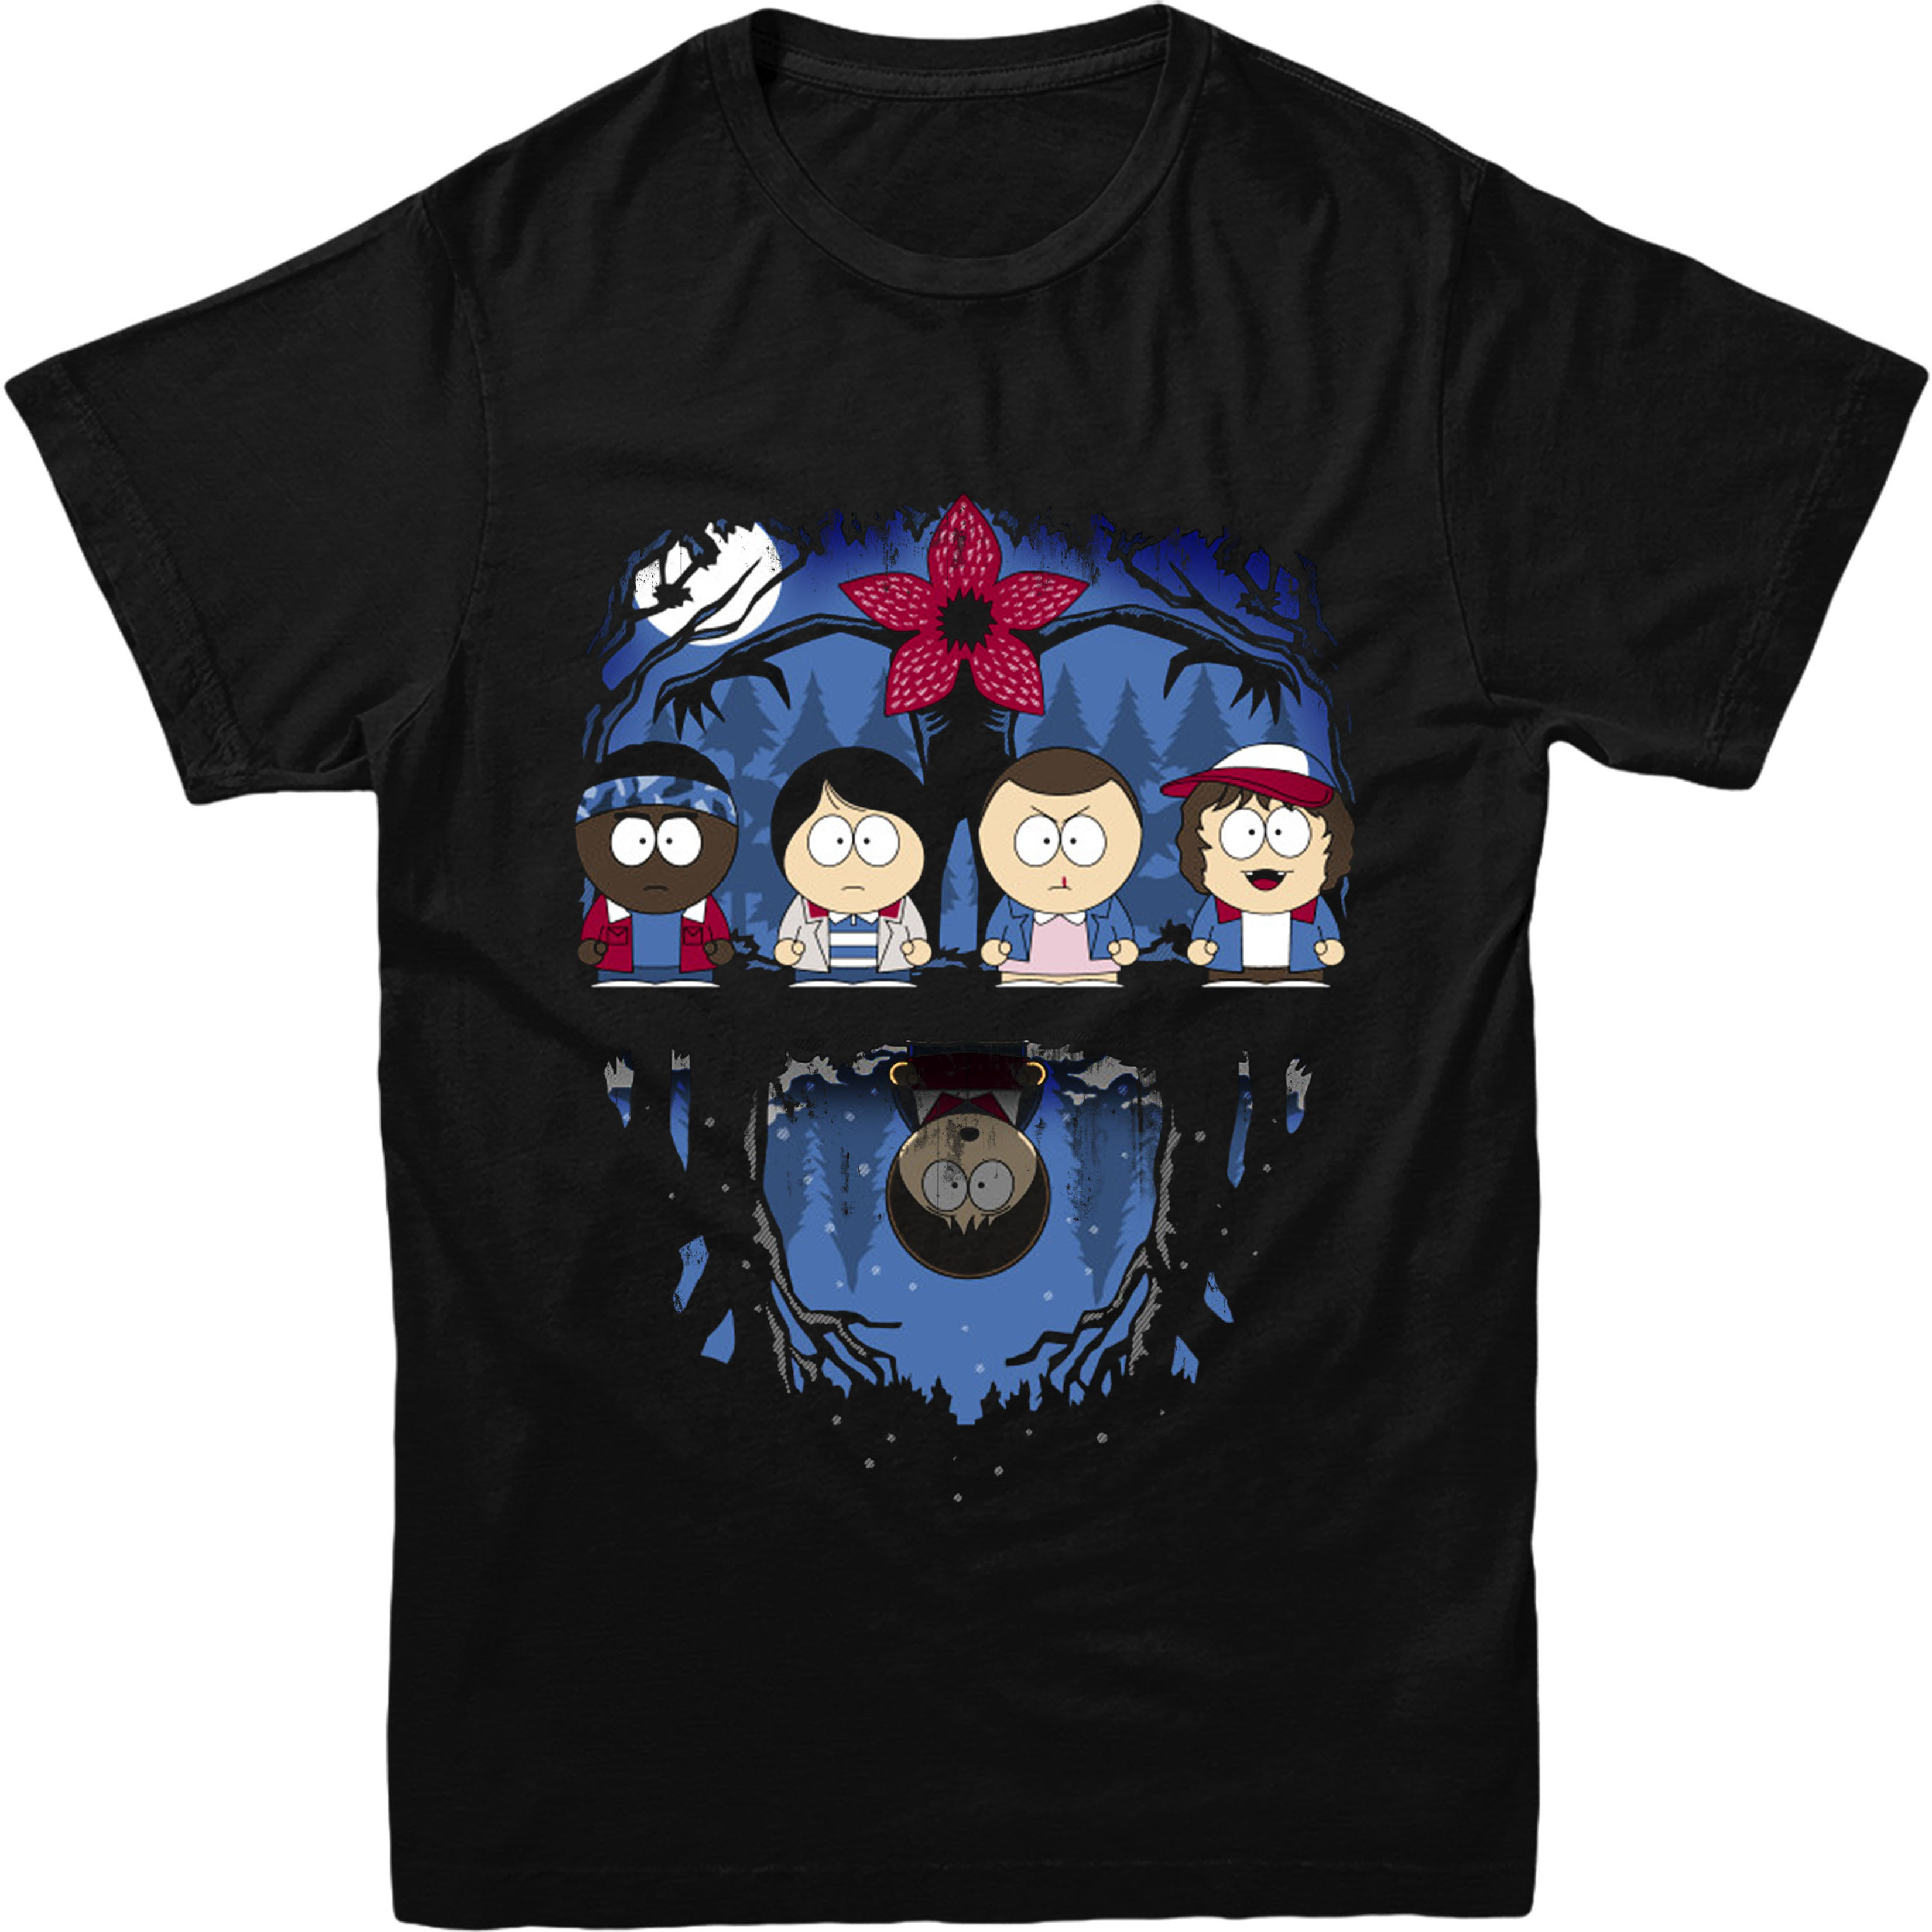 Stranger Things T-Shirt, South Park spoof T-Shirt, InspiRed Design Top ...